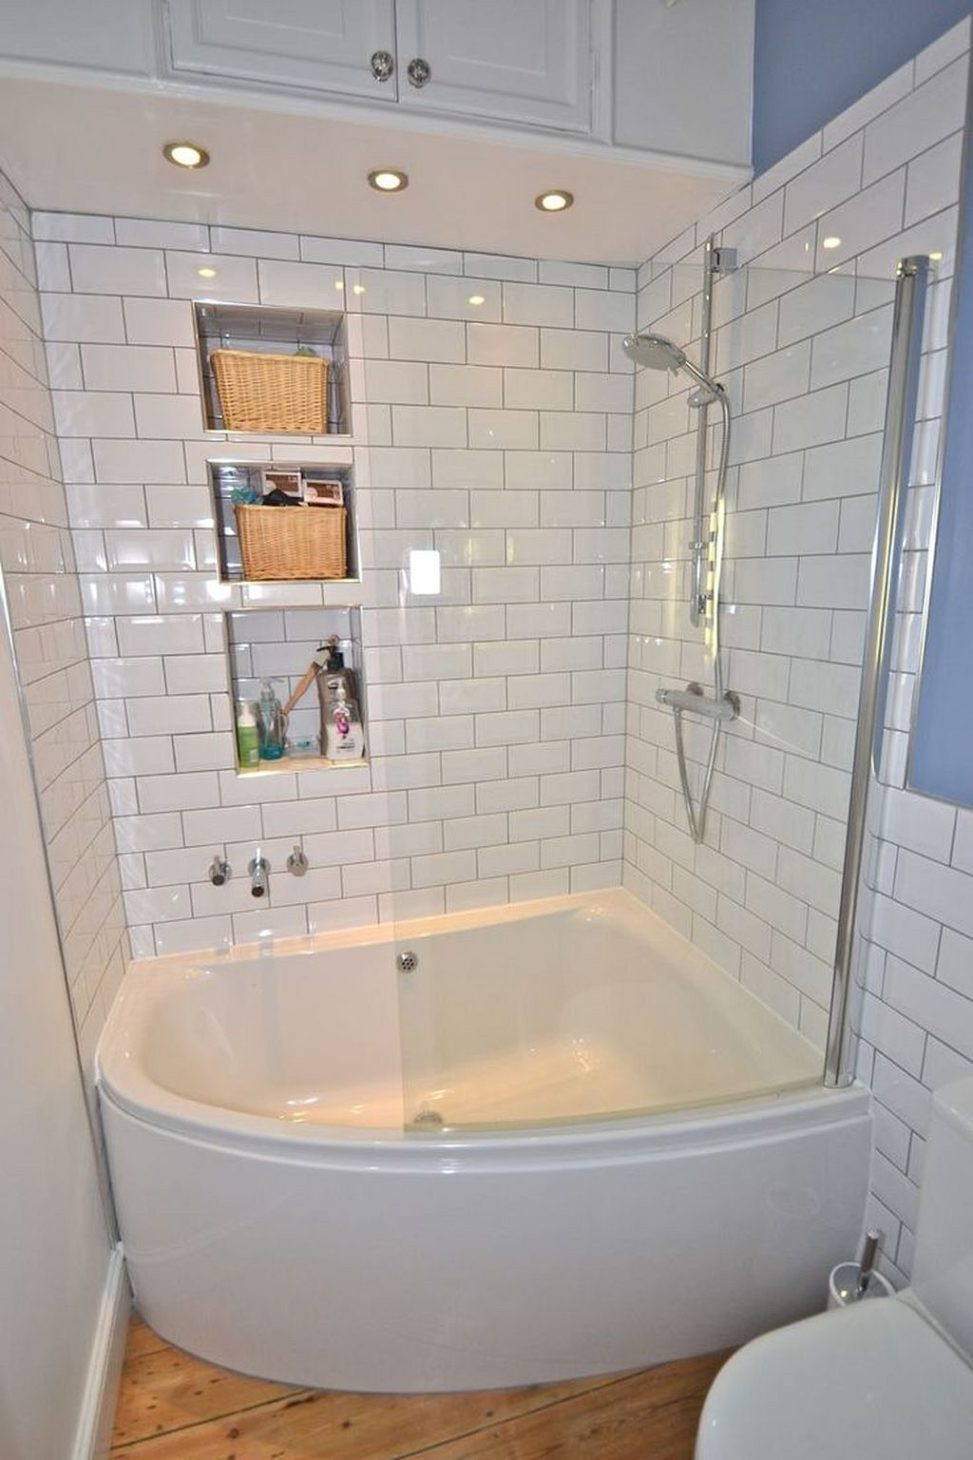 Small Bathroom With Tub
 Tiny Bathroom Tub Shower bo Remodeling Ideas 55